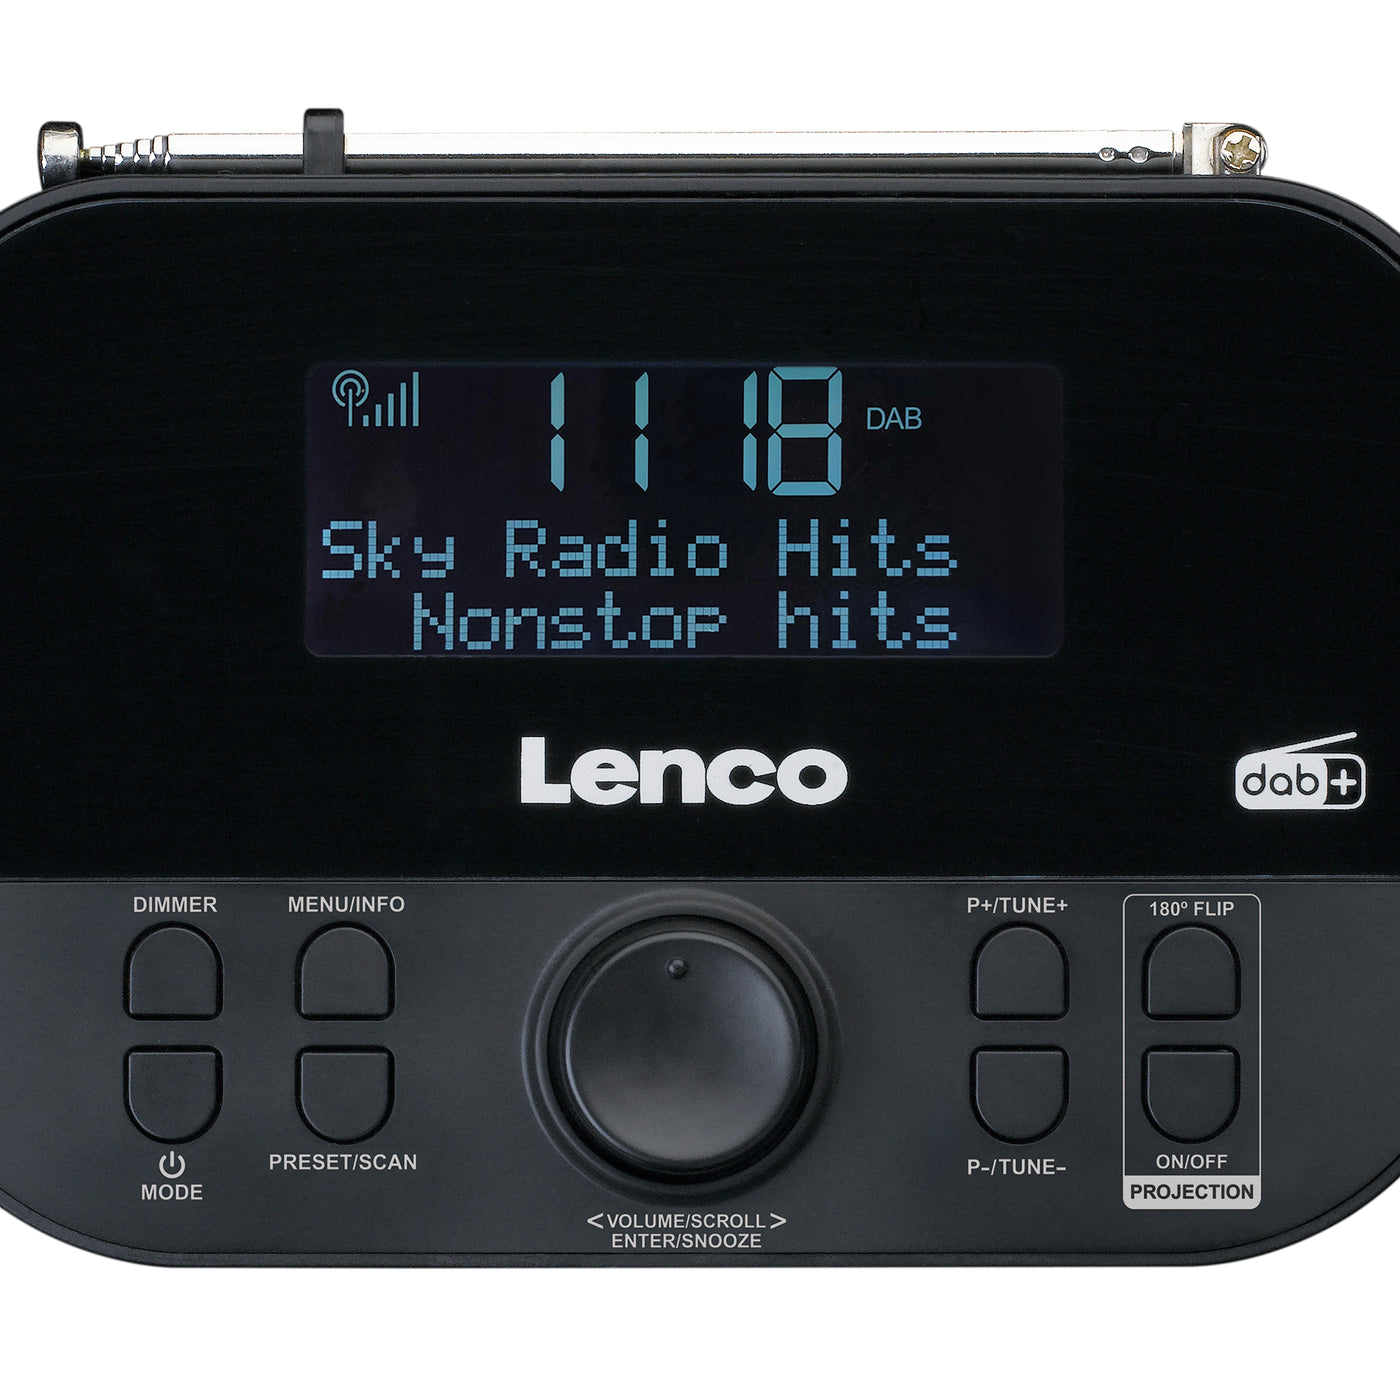 LENCO CR-615BK - DAB+ and projection radio FM – Black -Catalog Lenco - with Time